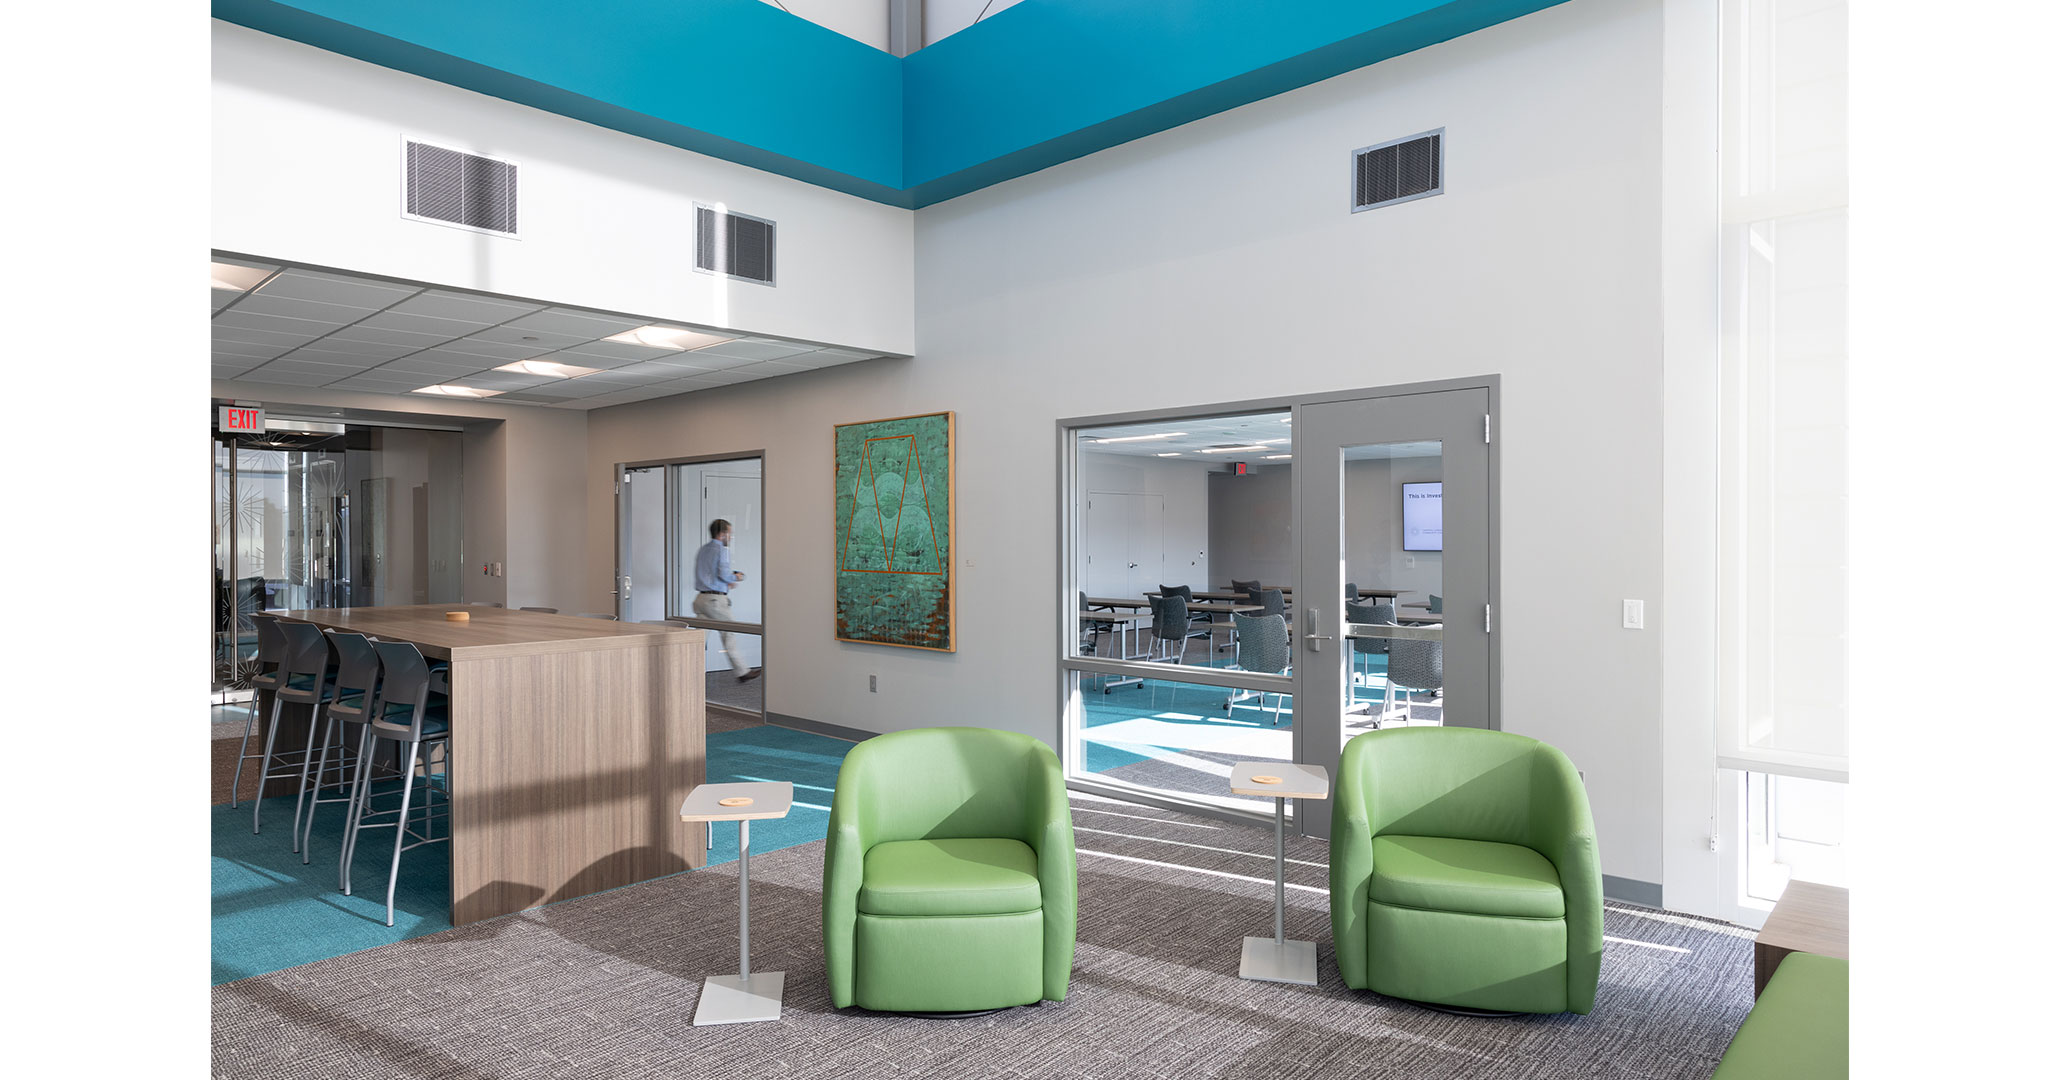 BOUDREAUX architects designed phase 2 of Central Carolina Community Foundation’s office expansion